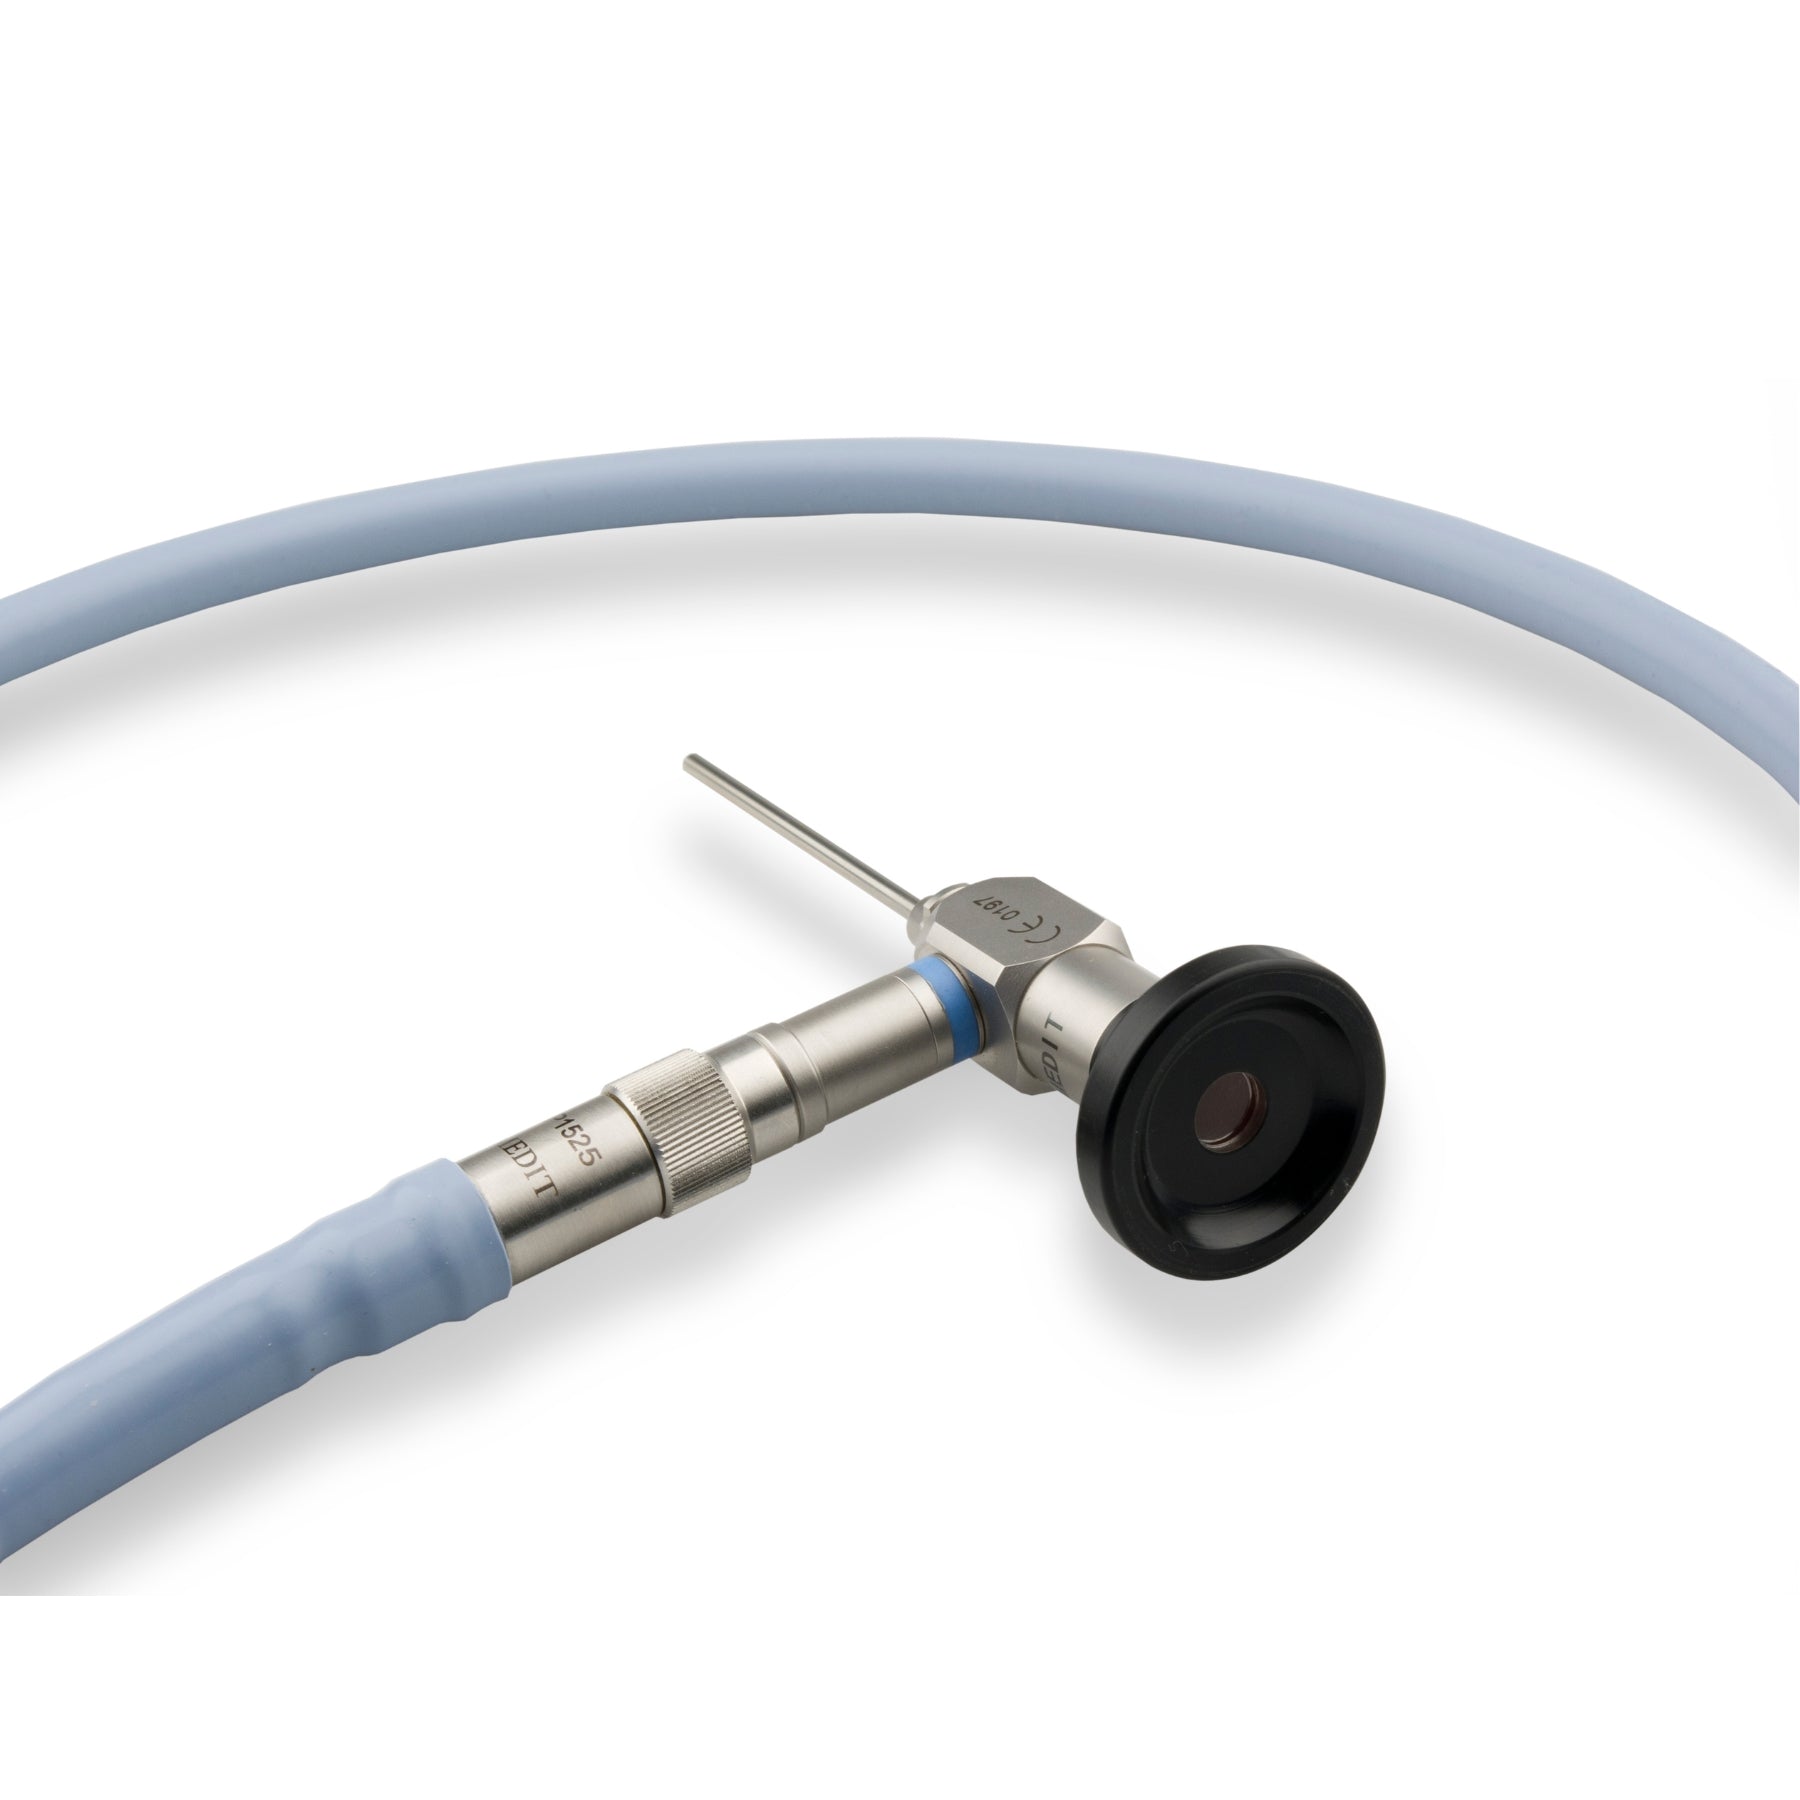 Fiber Optic Light Cable for Endoscopes and Borescopes